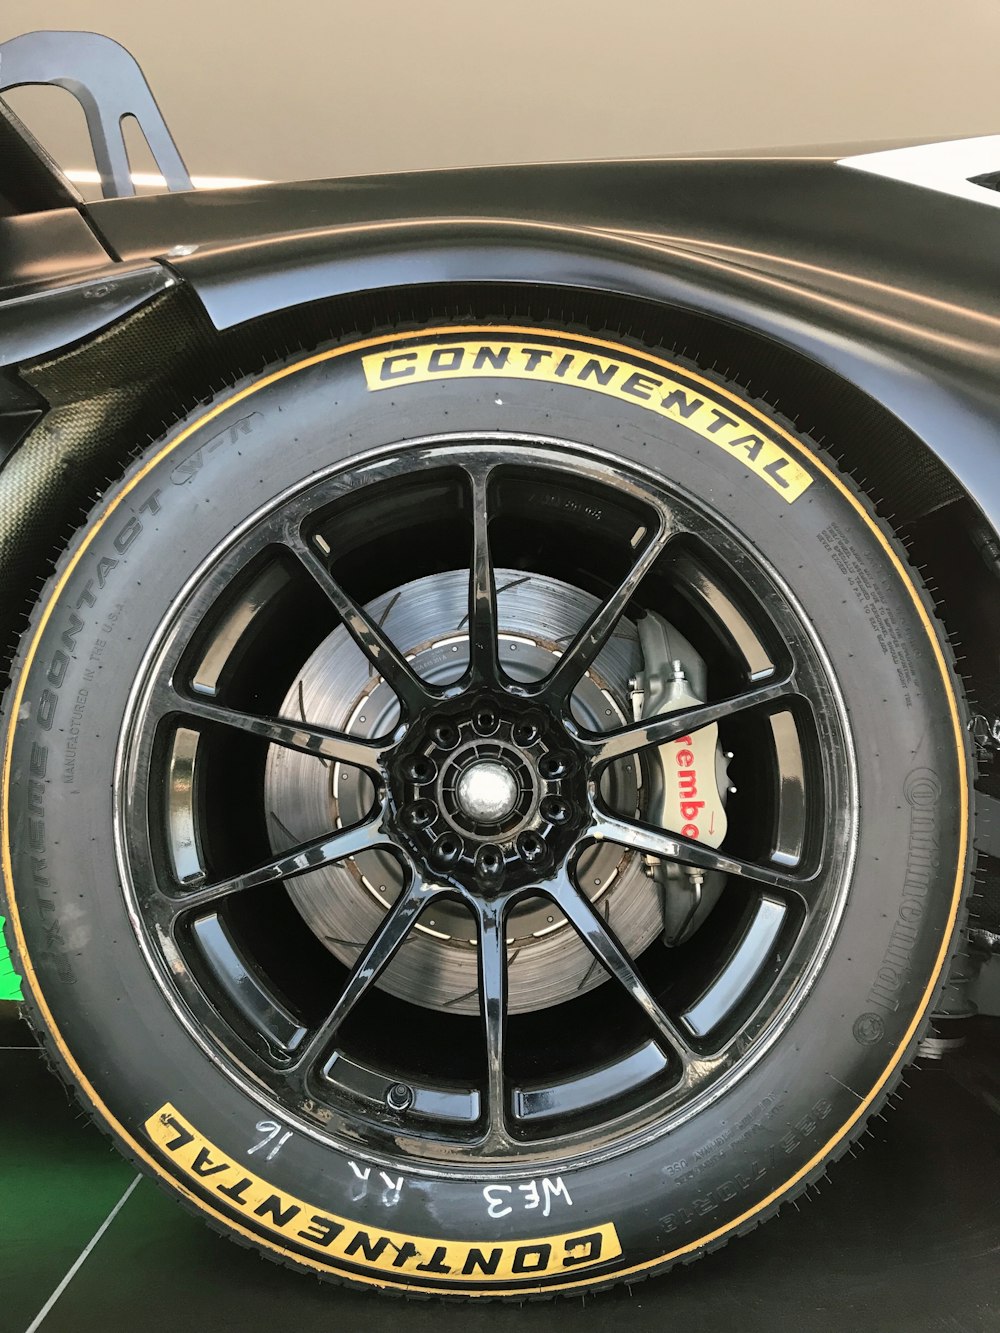 black multi-spoke vehicle wheel and Continental tire